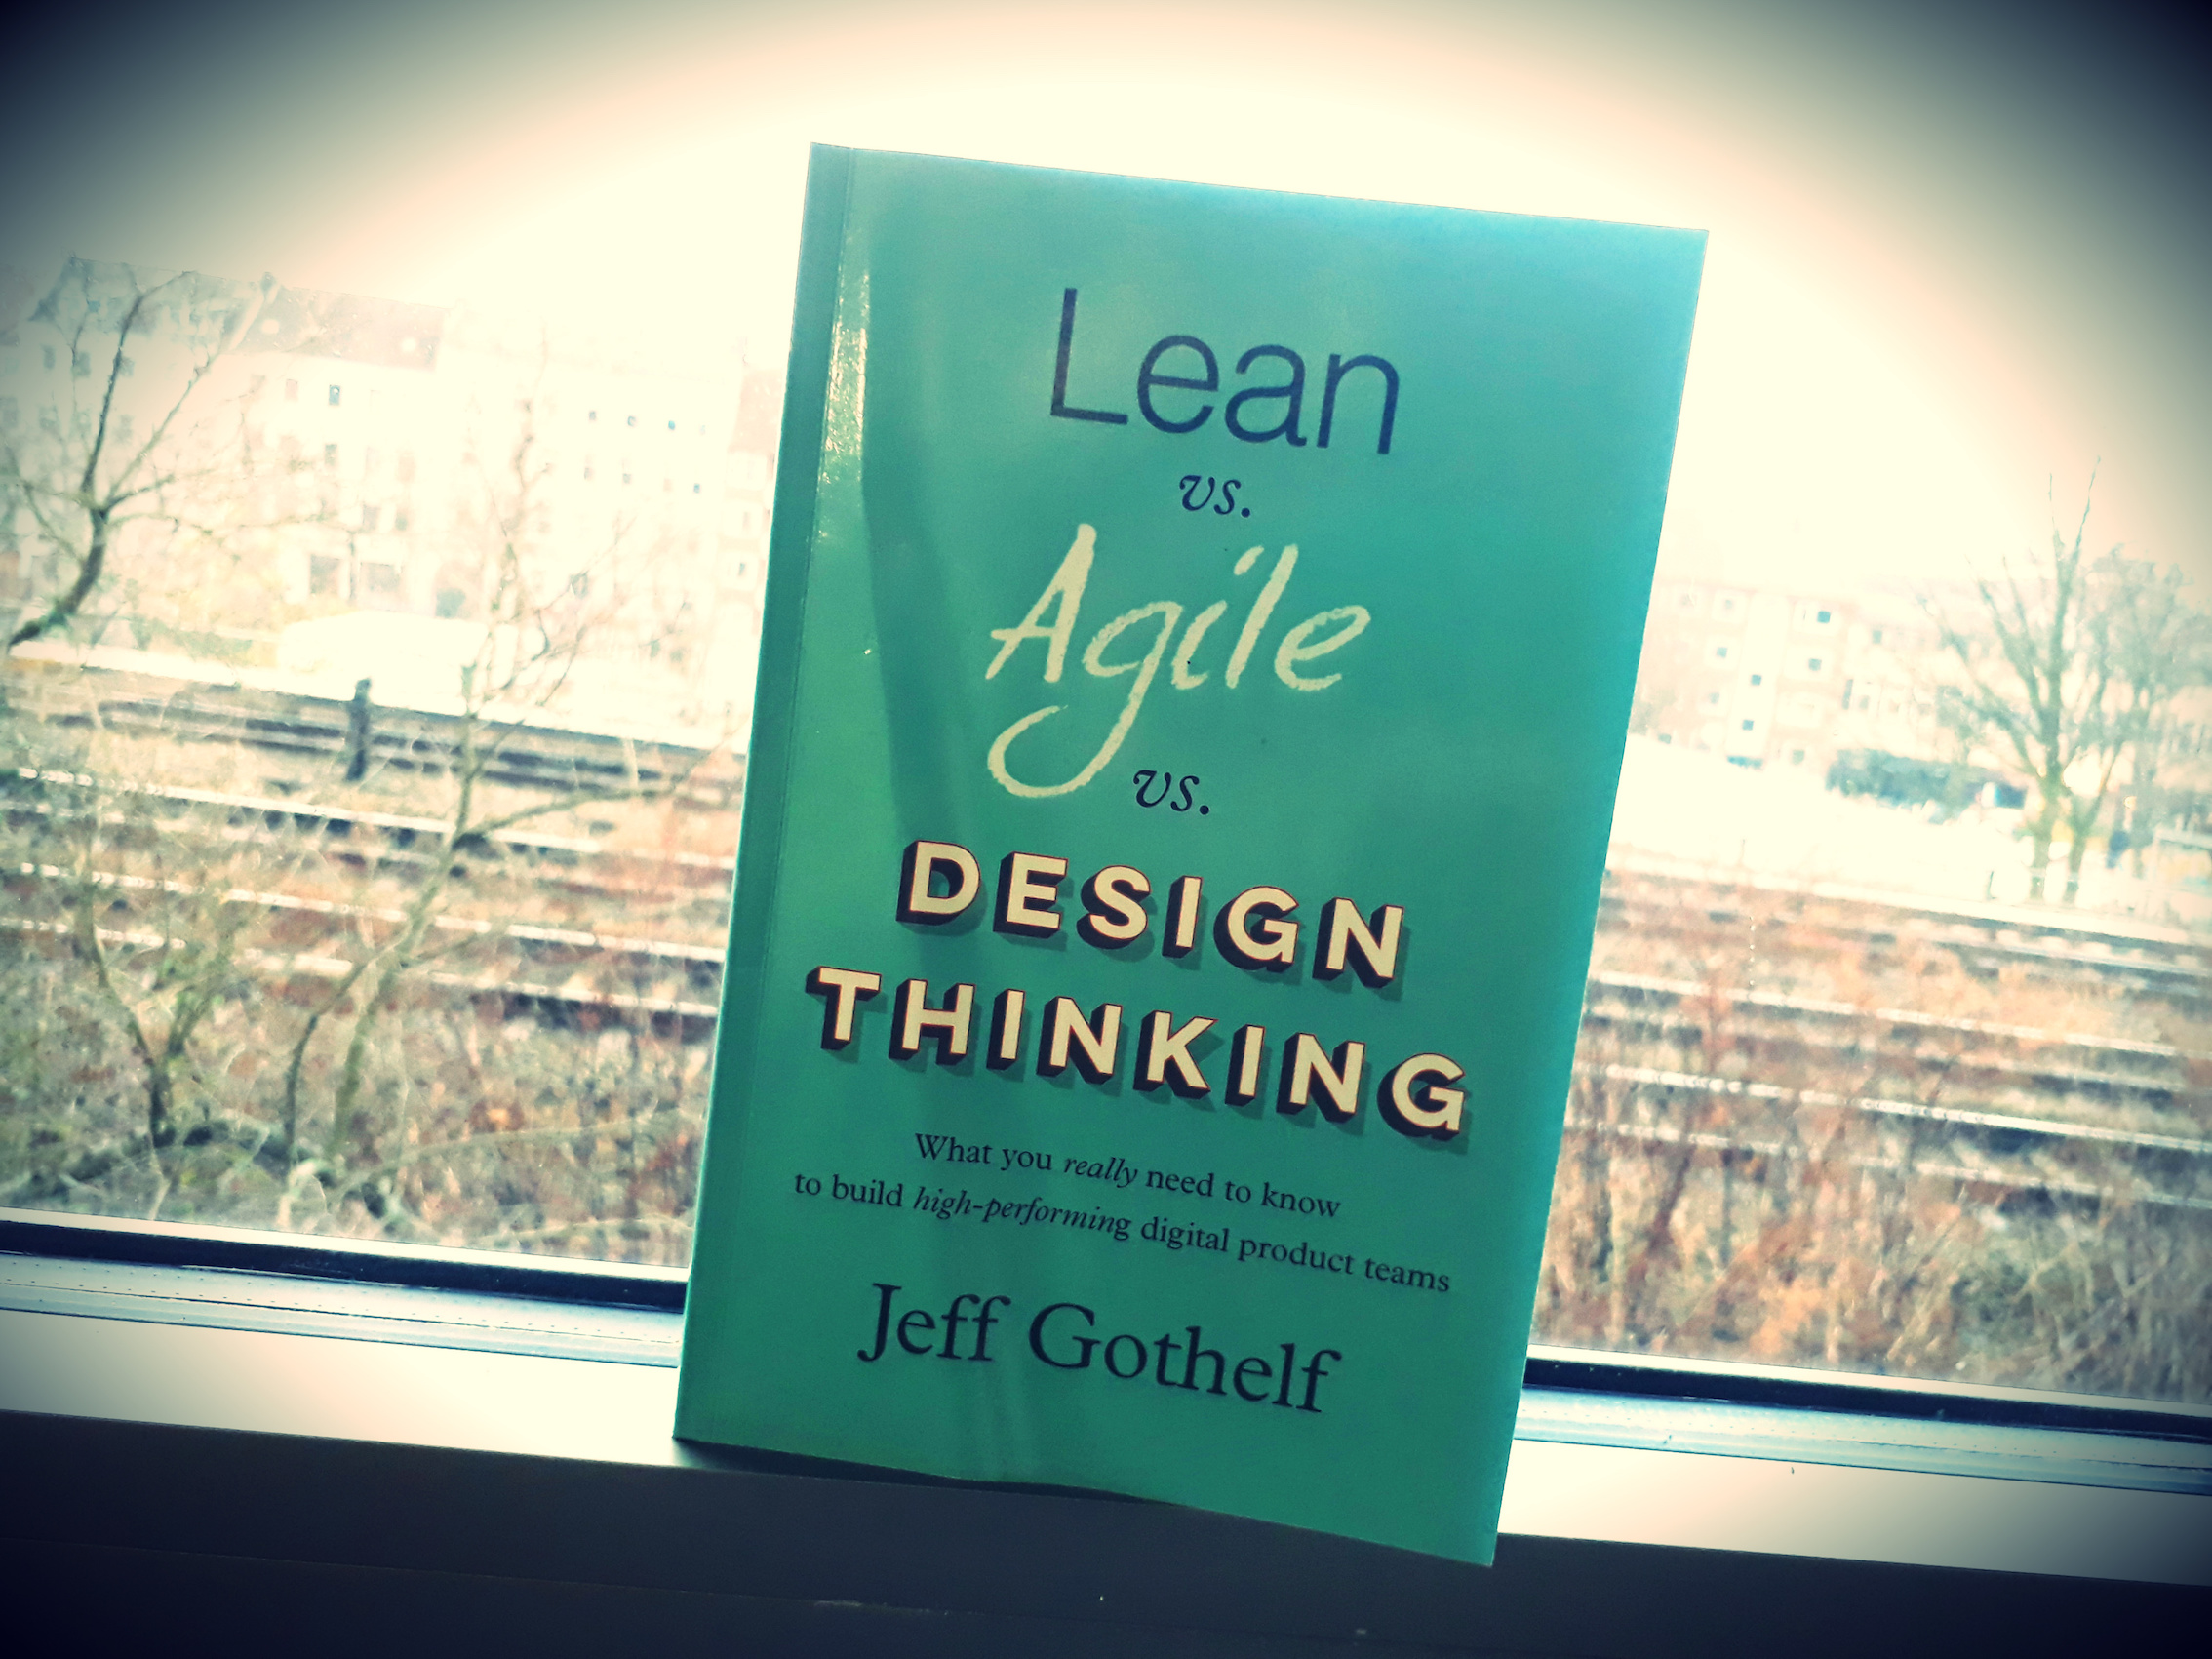 Jeff Gothelf - lean vs. agile vs. Design Thinking